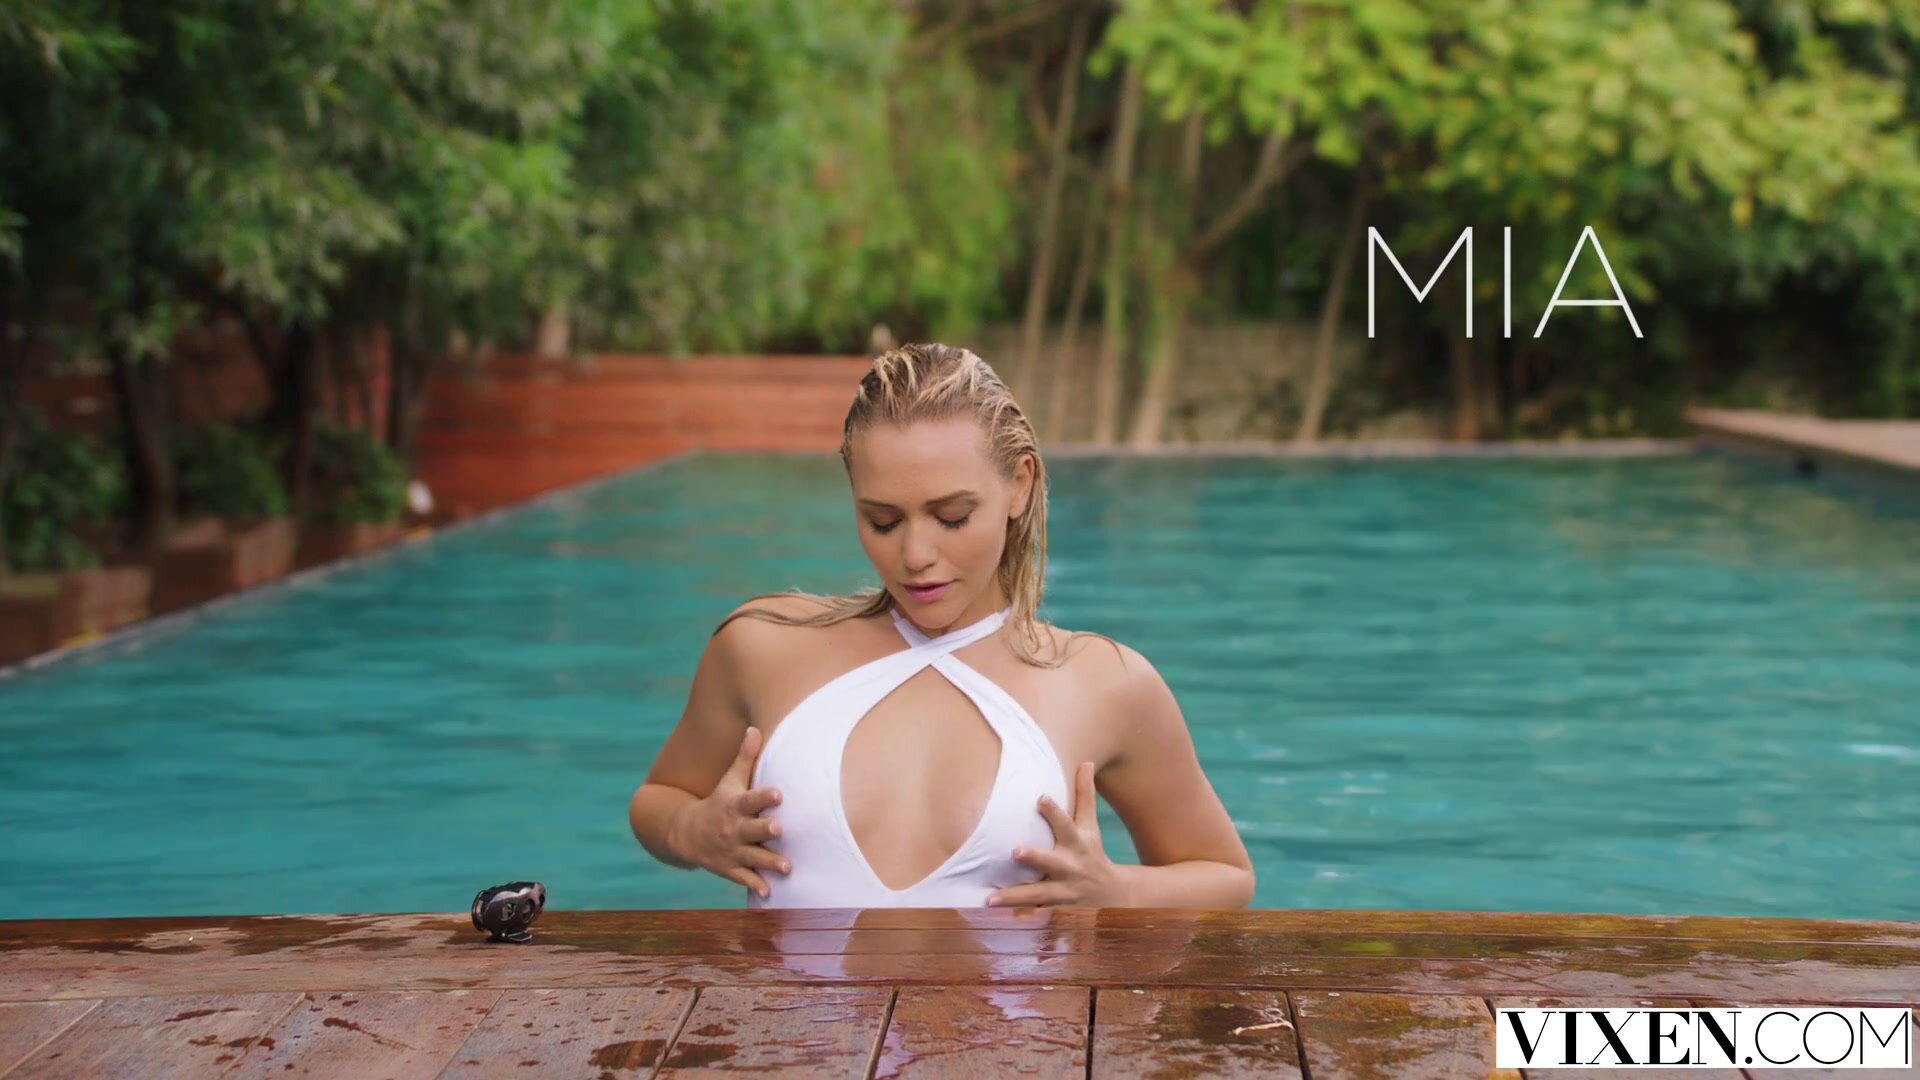 Mia malkova|My guests are sex toys|Full HD|1080p